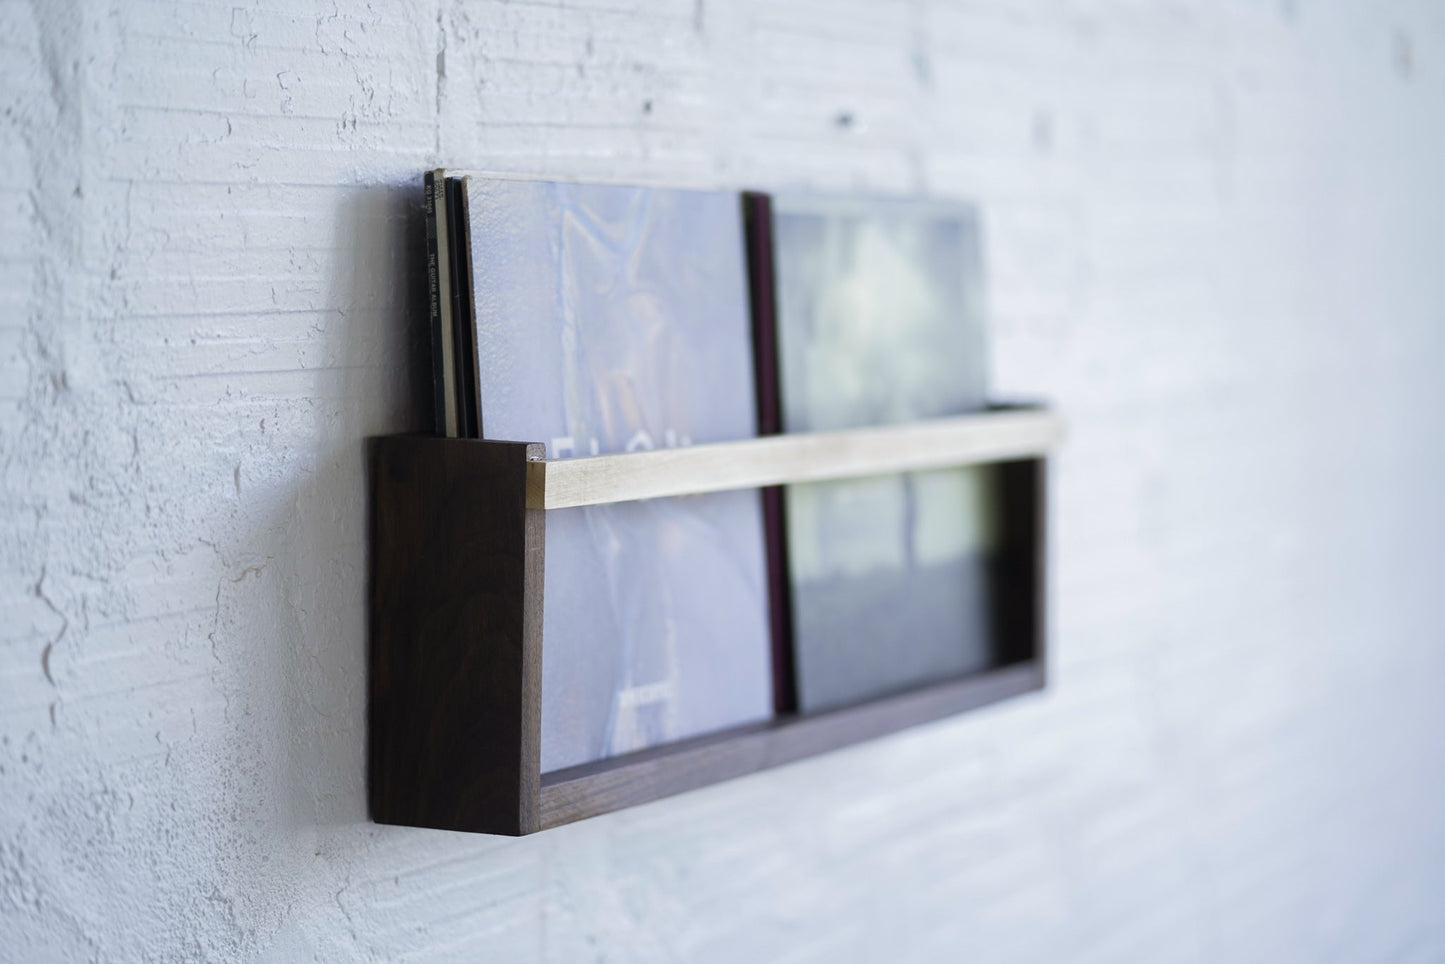 Agrega un toque de elegancia a tu hogar con este estante moderno y versátil - Kaimok Design 